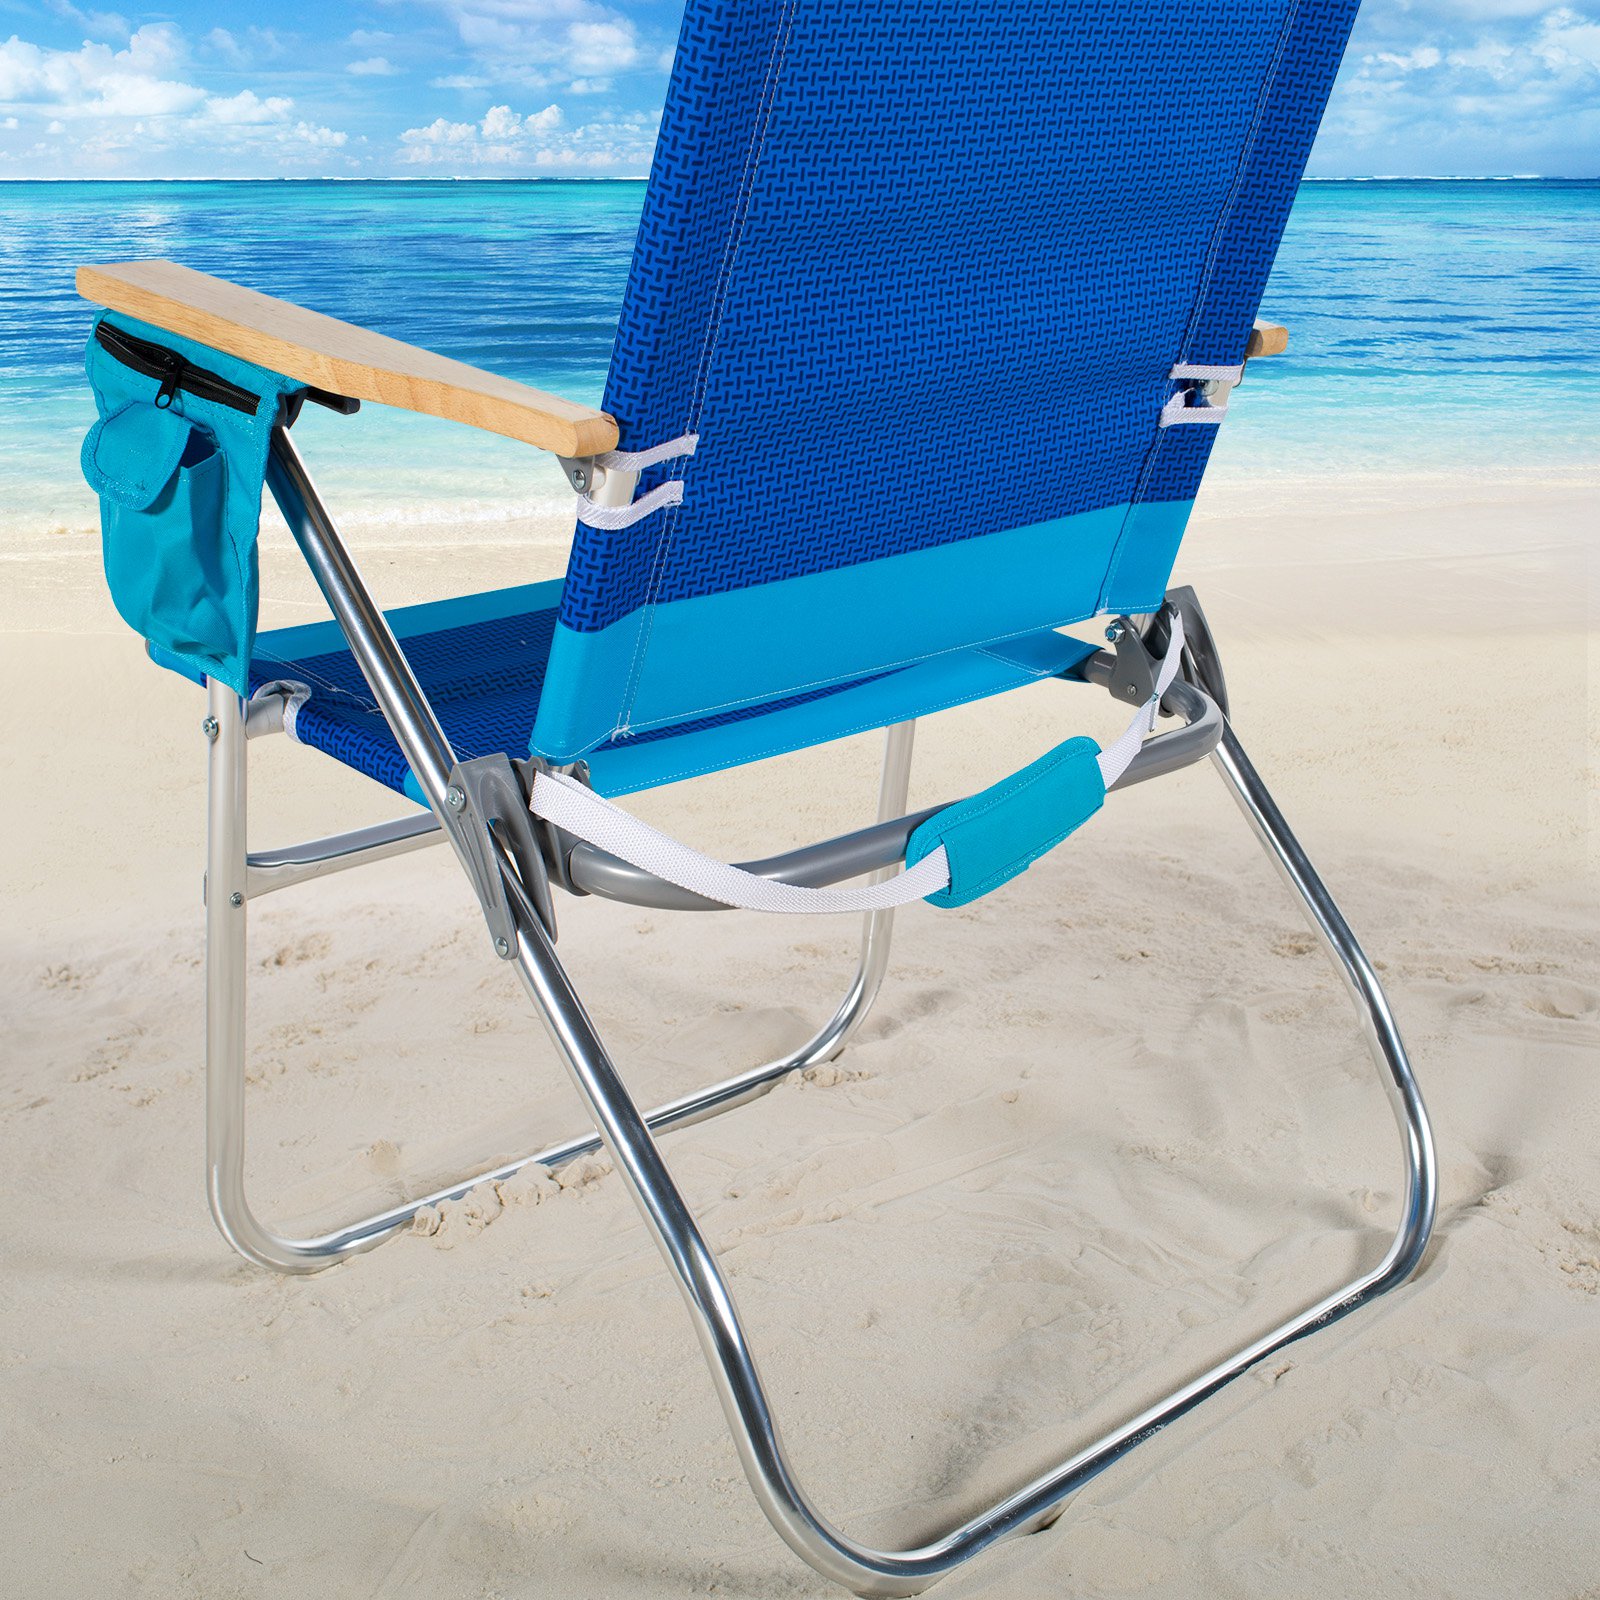 RIO Hi-Boy Lounge Aluminum Beach Chair - Multi-color - image 3 of 11